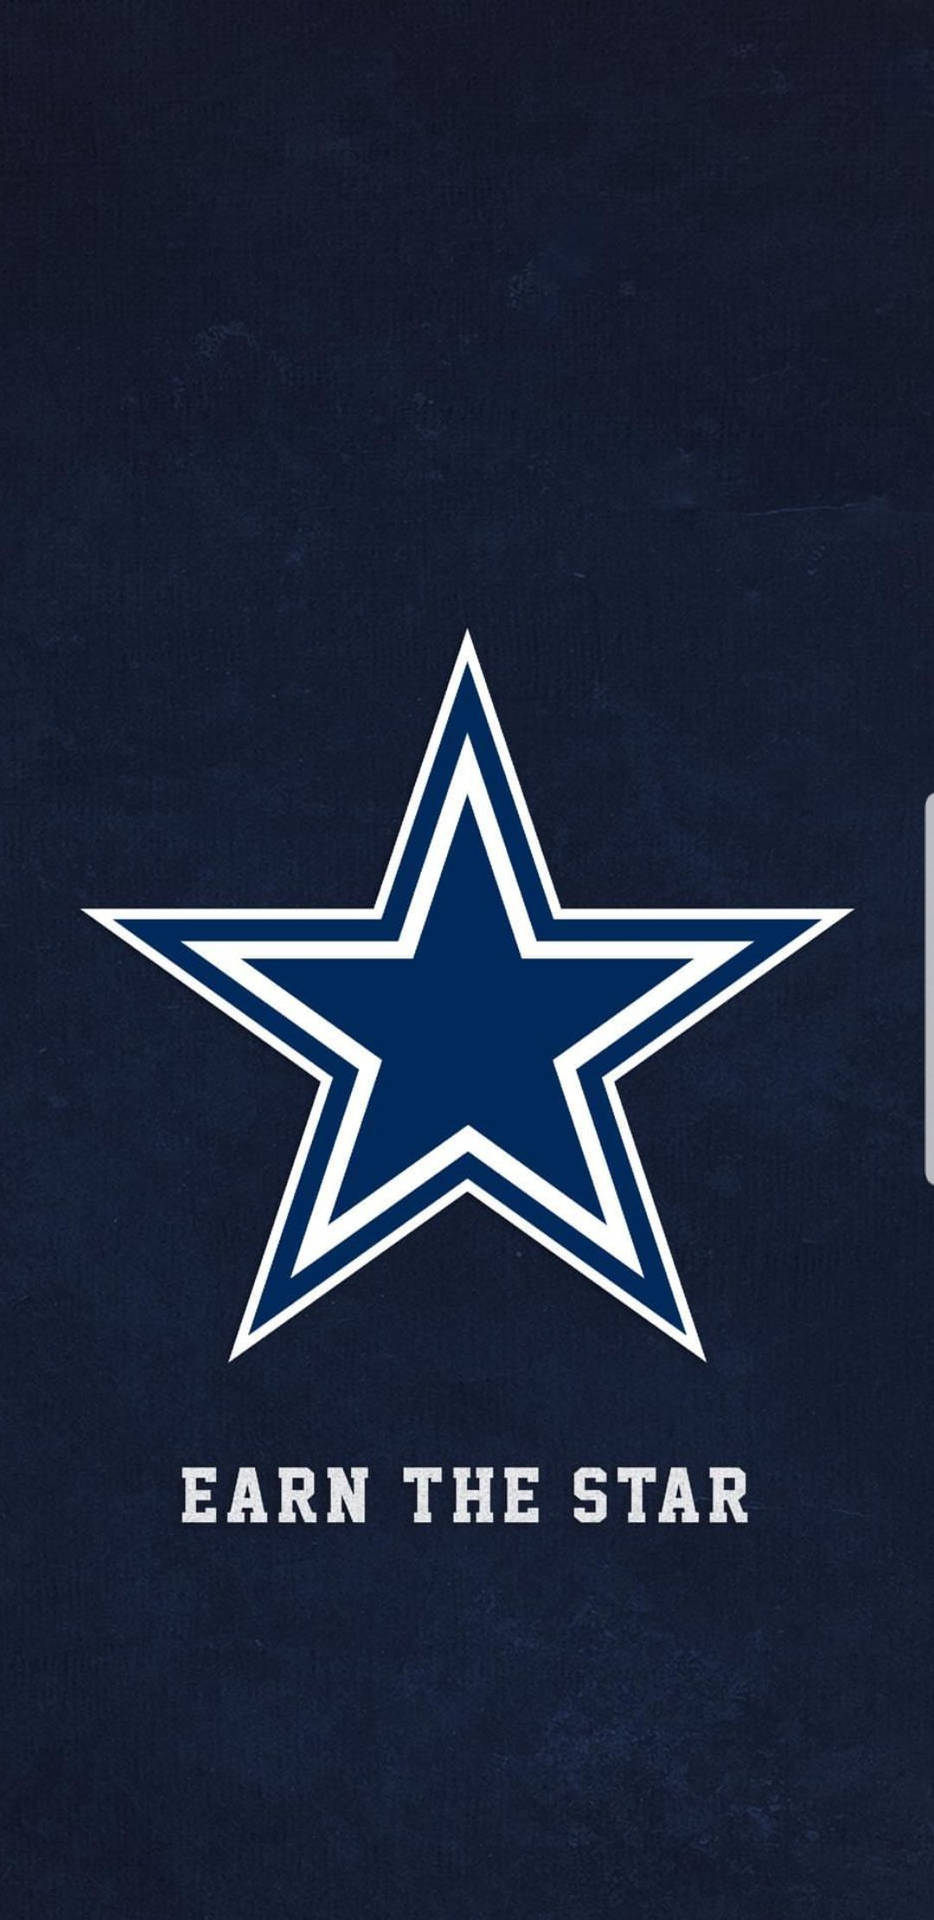 Dallas Cowboys Earn The Star Wallpaper